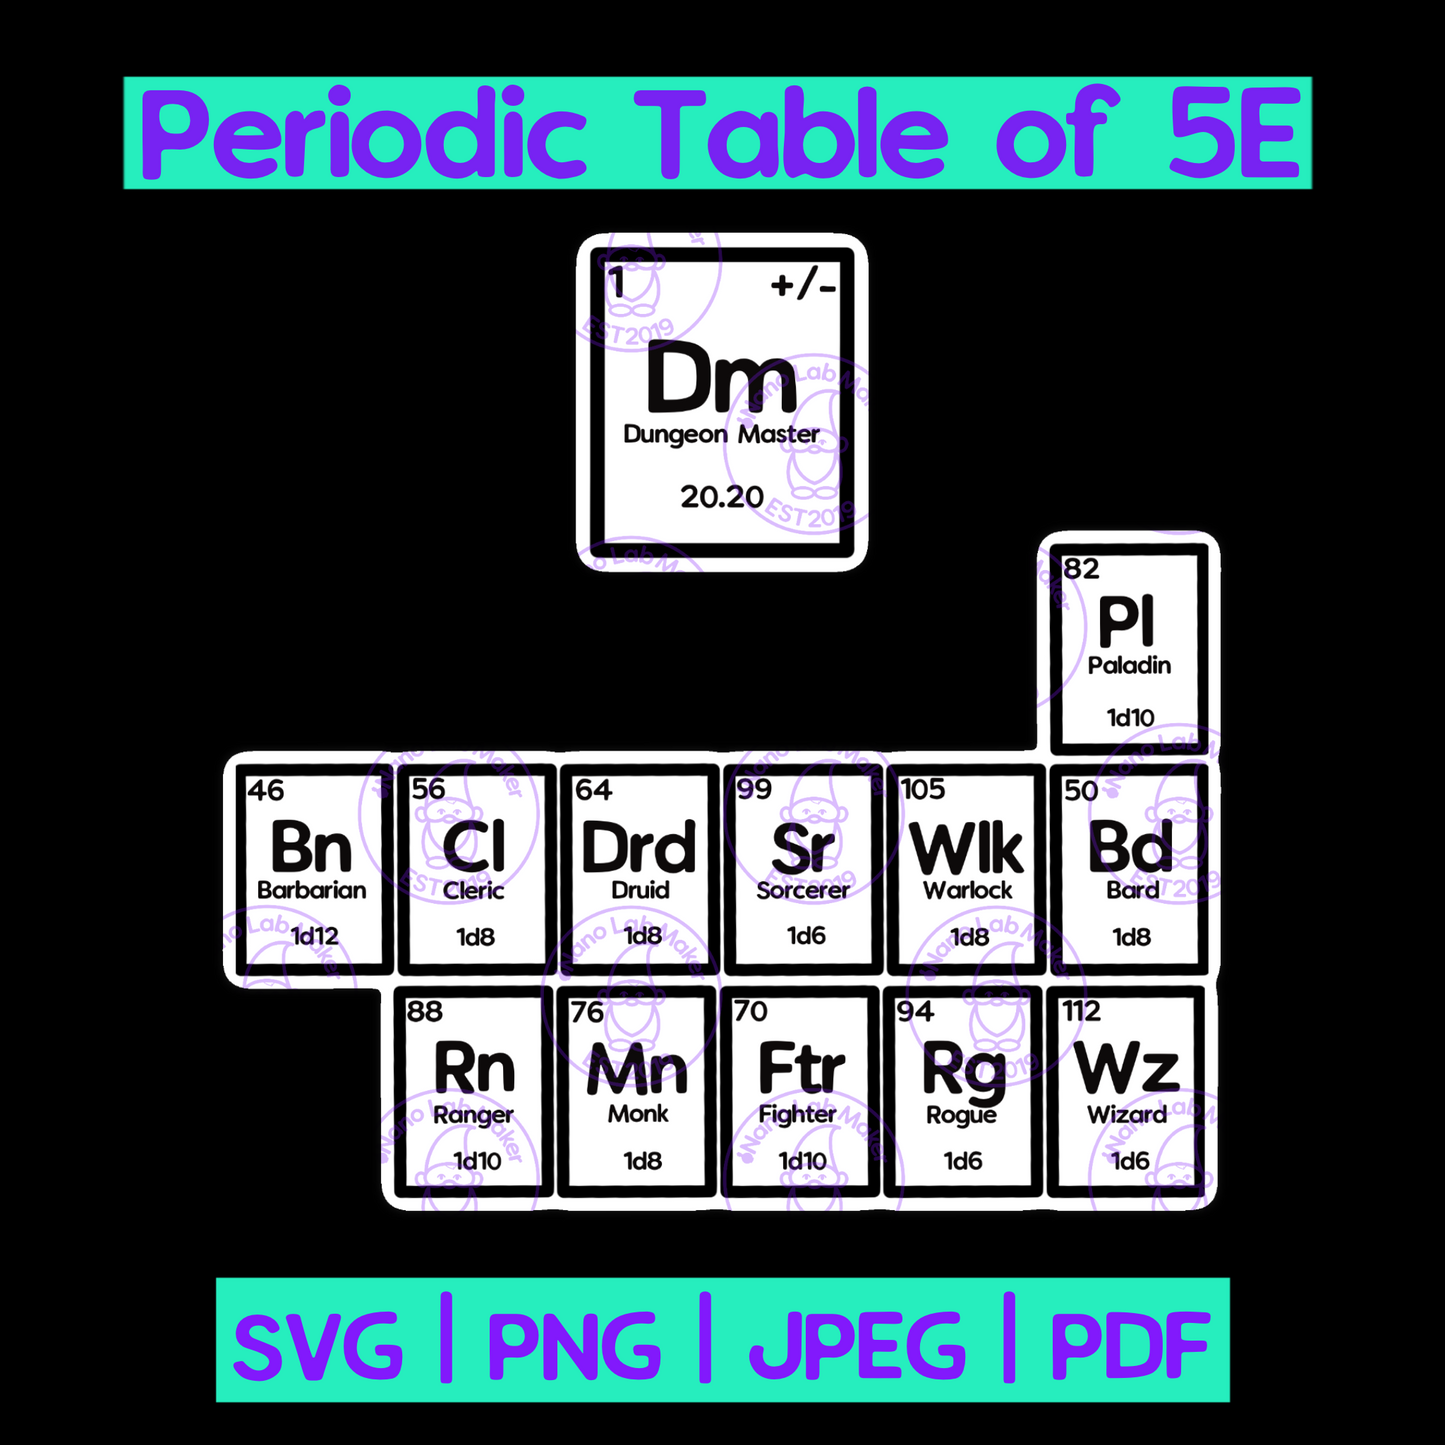 Periodic Table of 5E